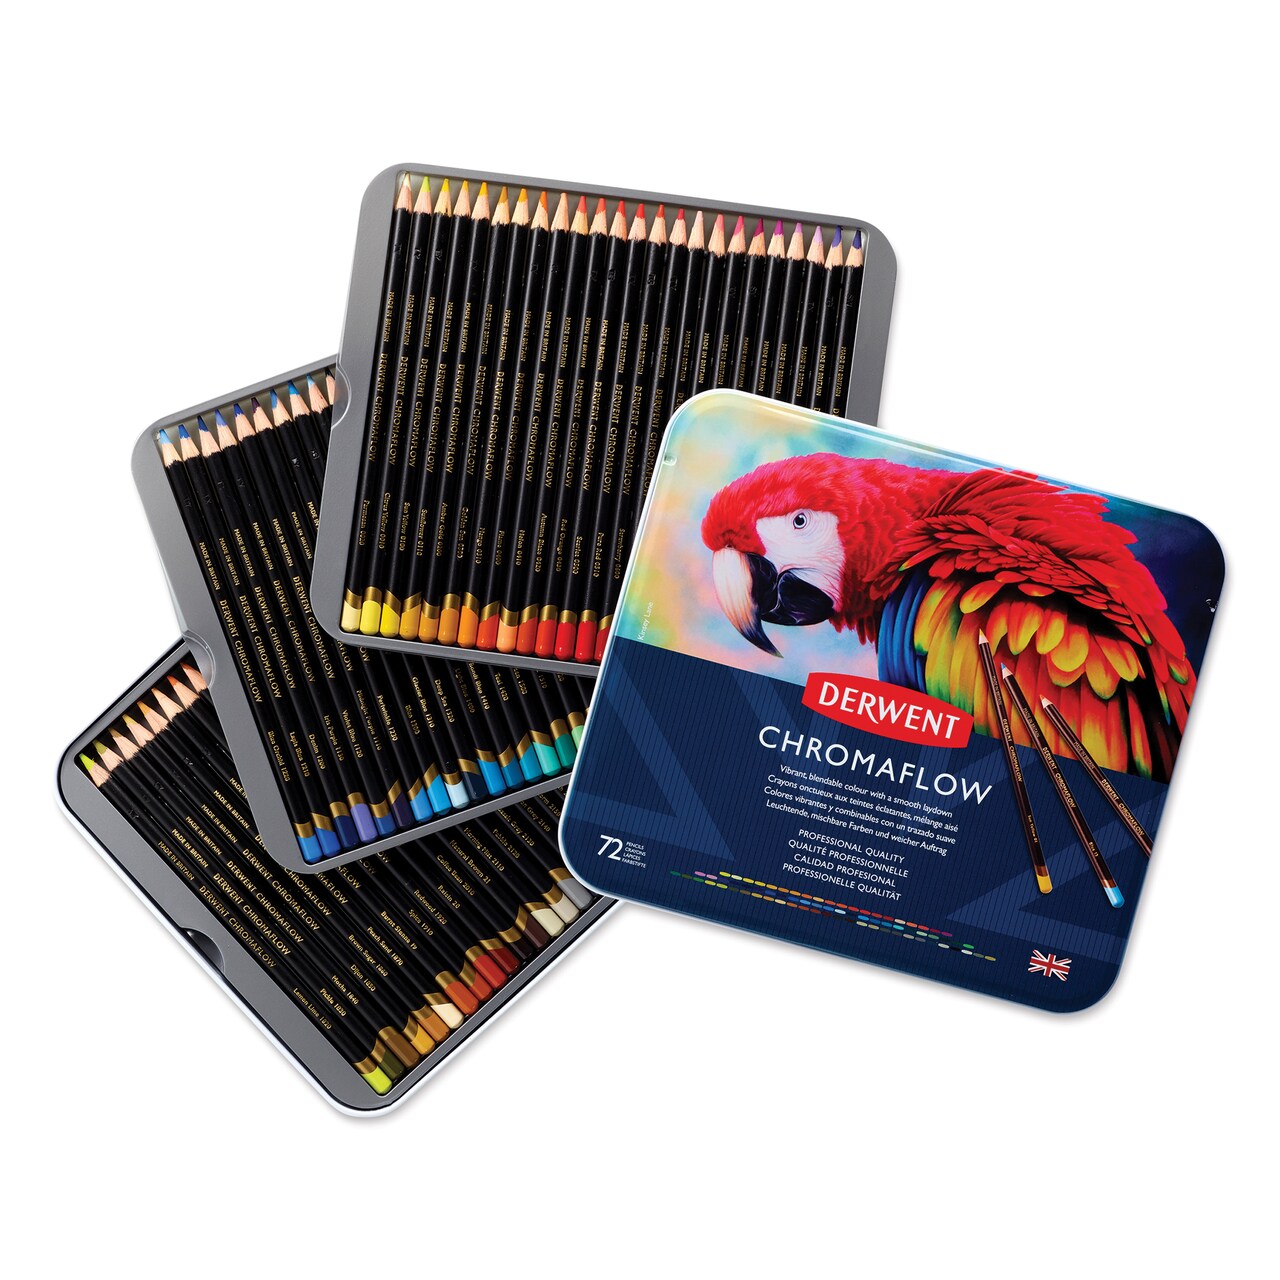 Derwent Chromaflow Colored Pencils - Set of 72